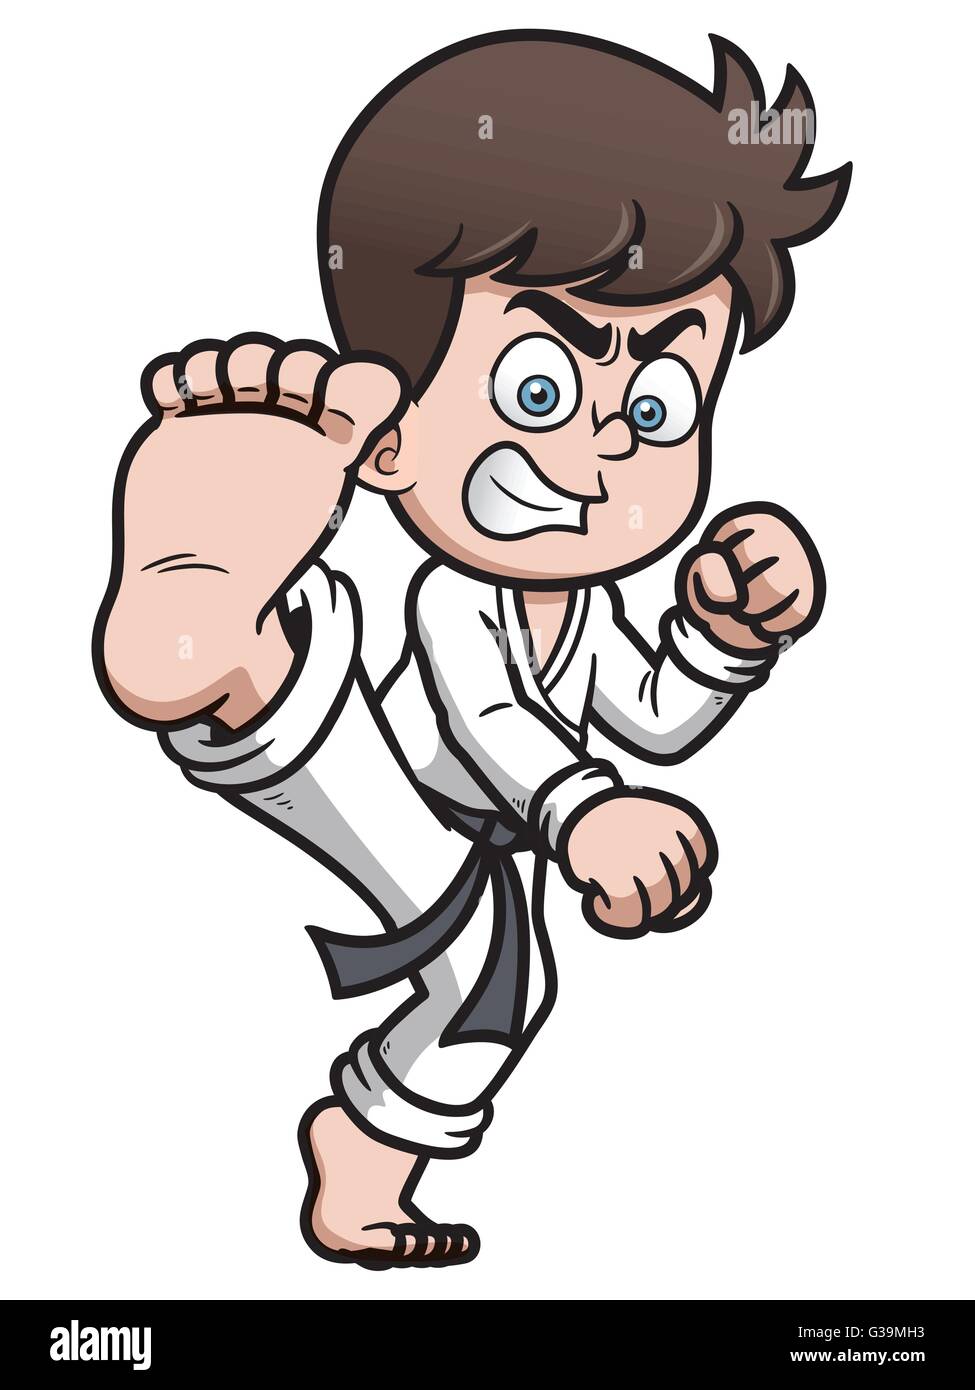 Karate cartoon hi-res stock photography and images - Alamy